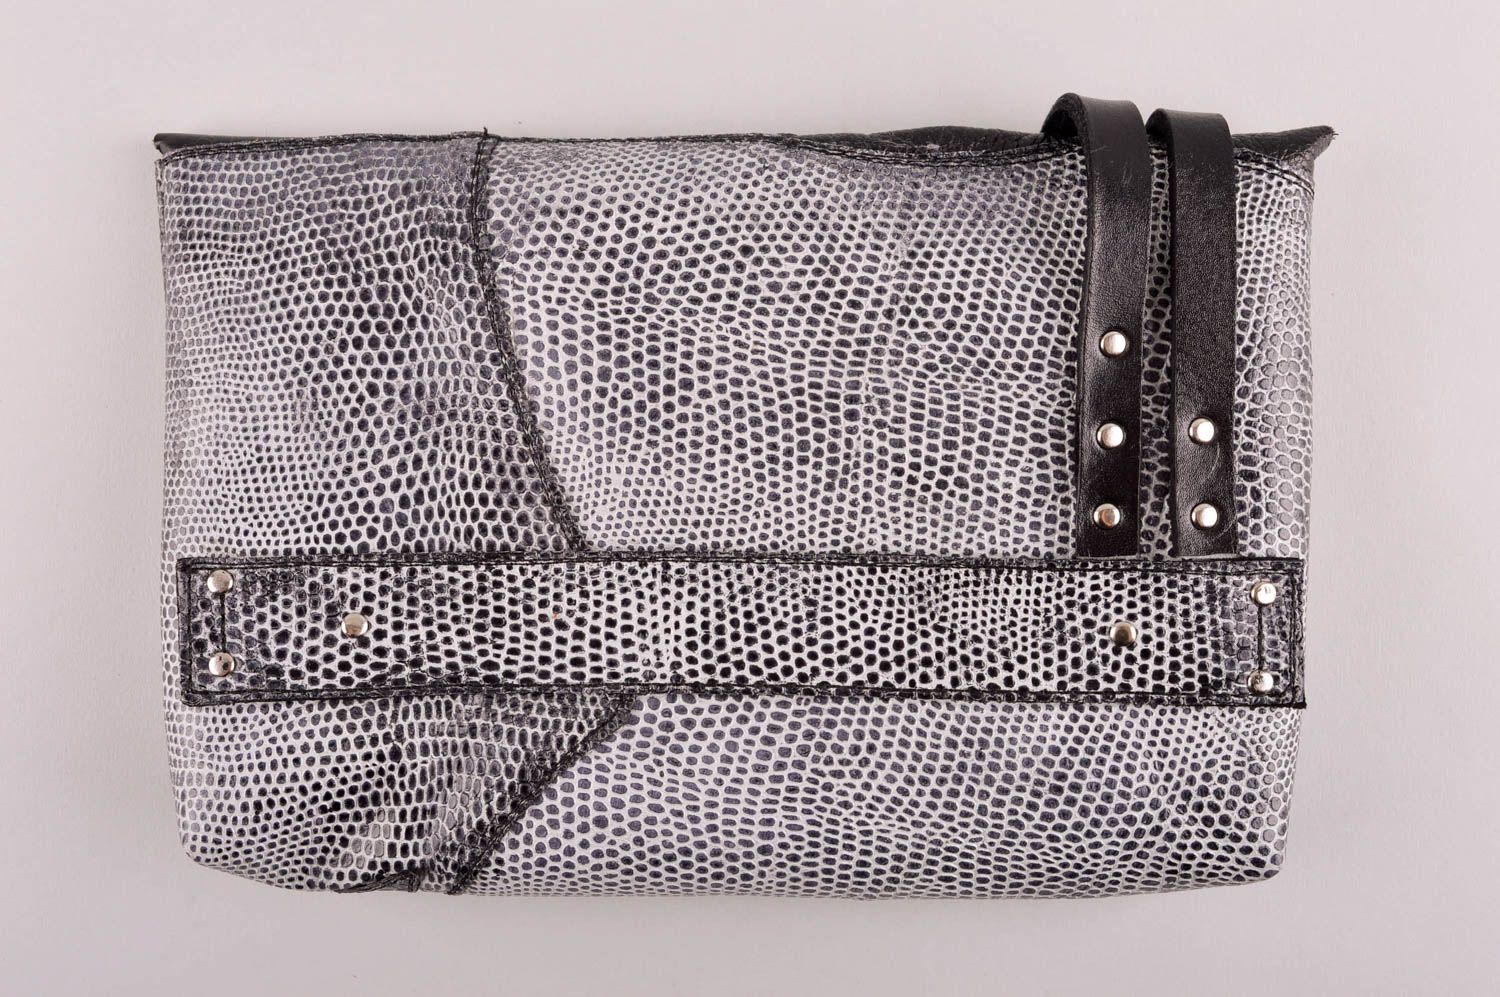 Small handmade leather handbag stylish leather bag design accessories for girls photo 4